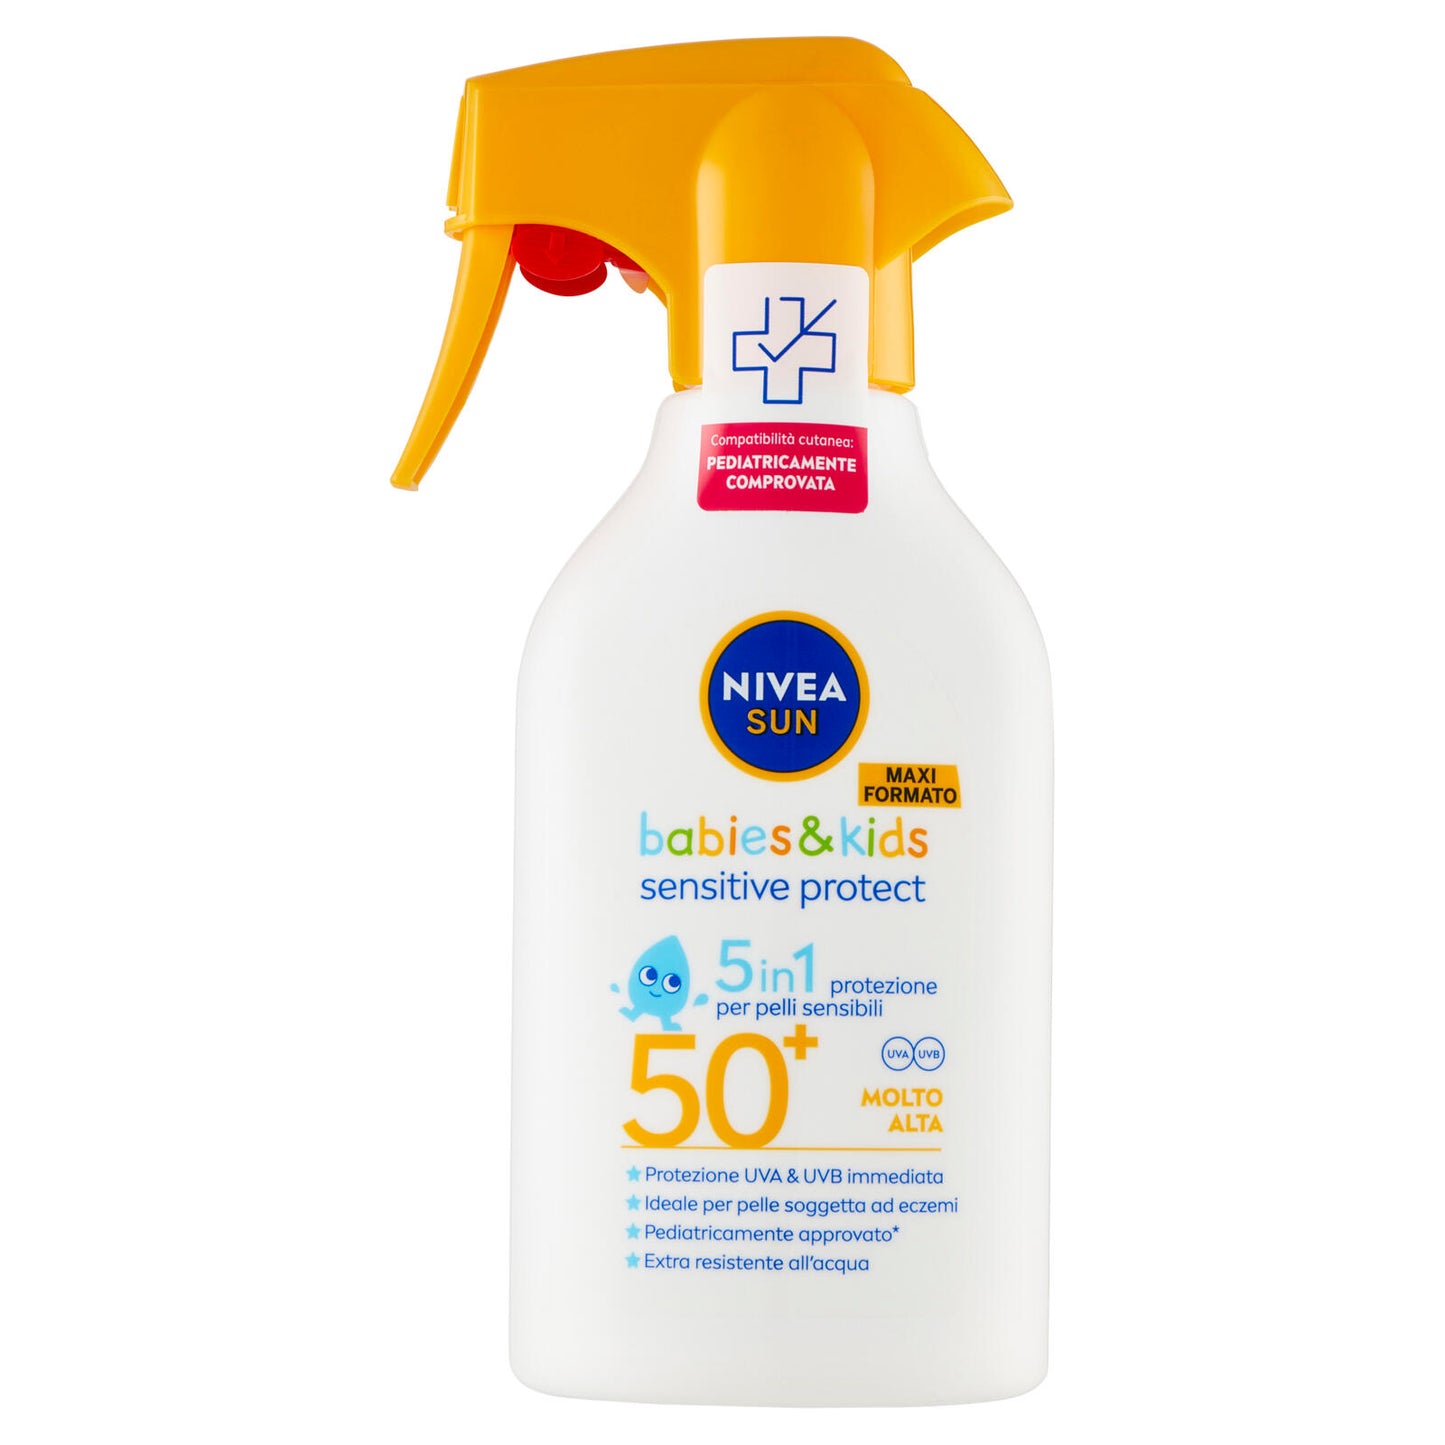 Nivea Sun babies & kids sensitive protect 50+ Molto Alta 270 ml